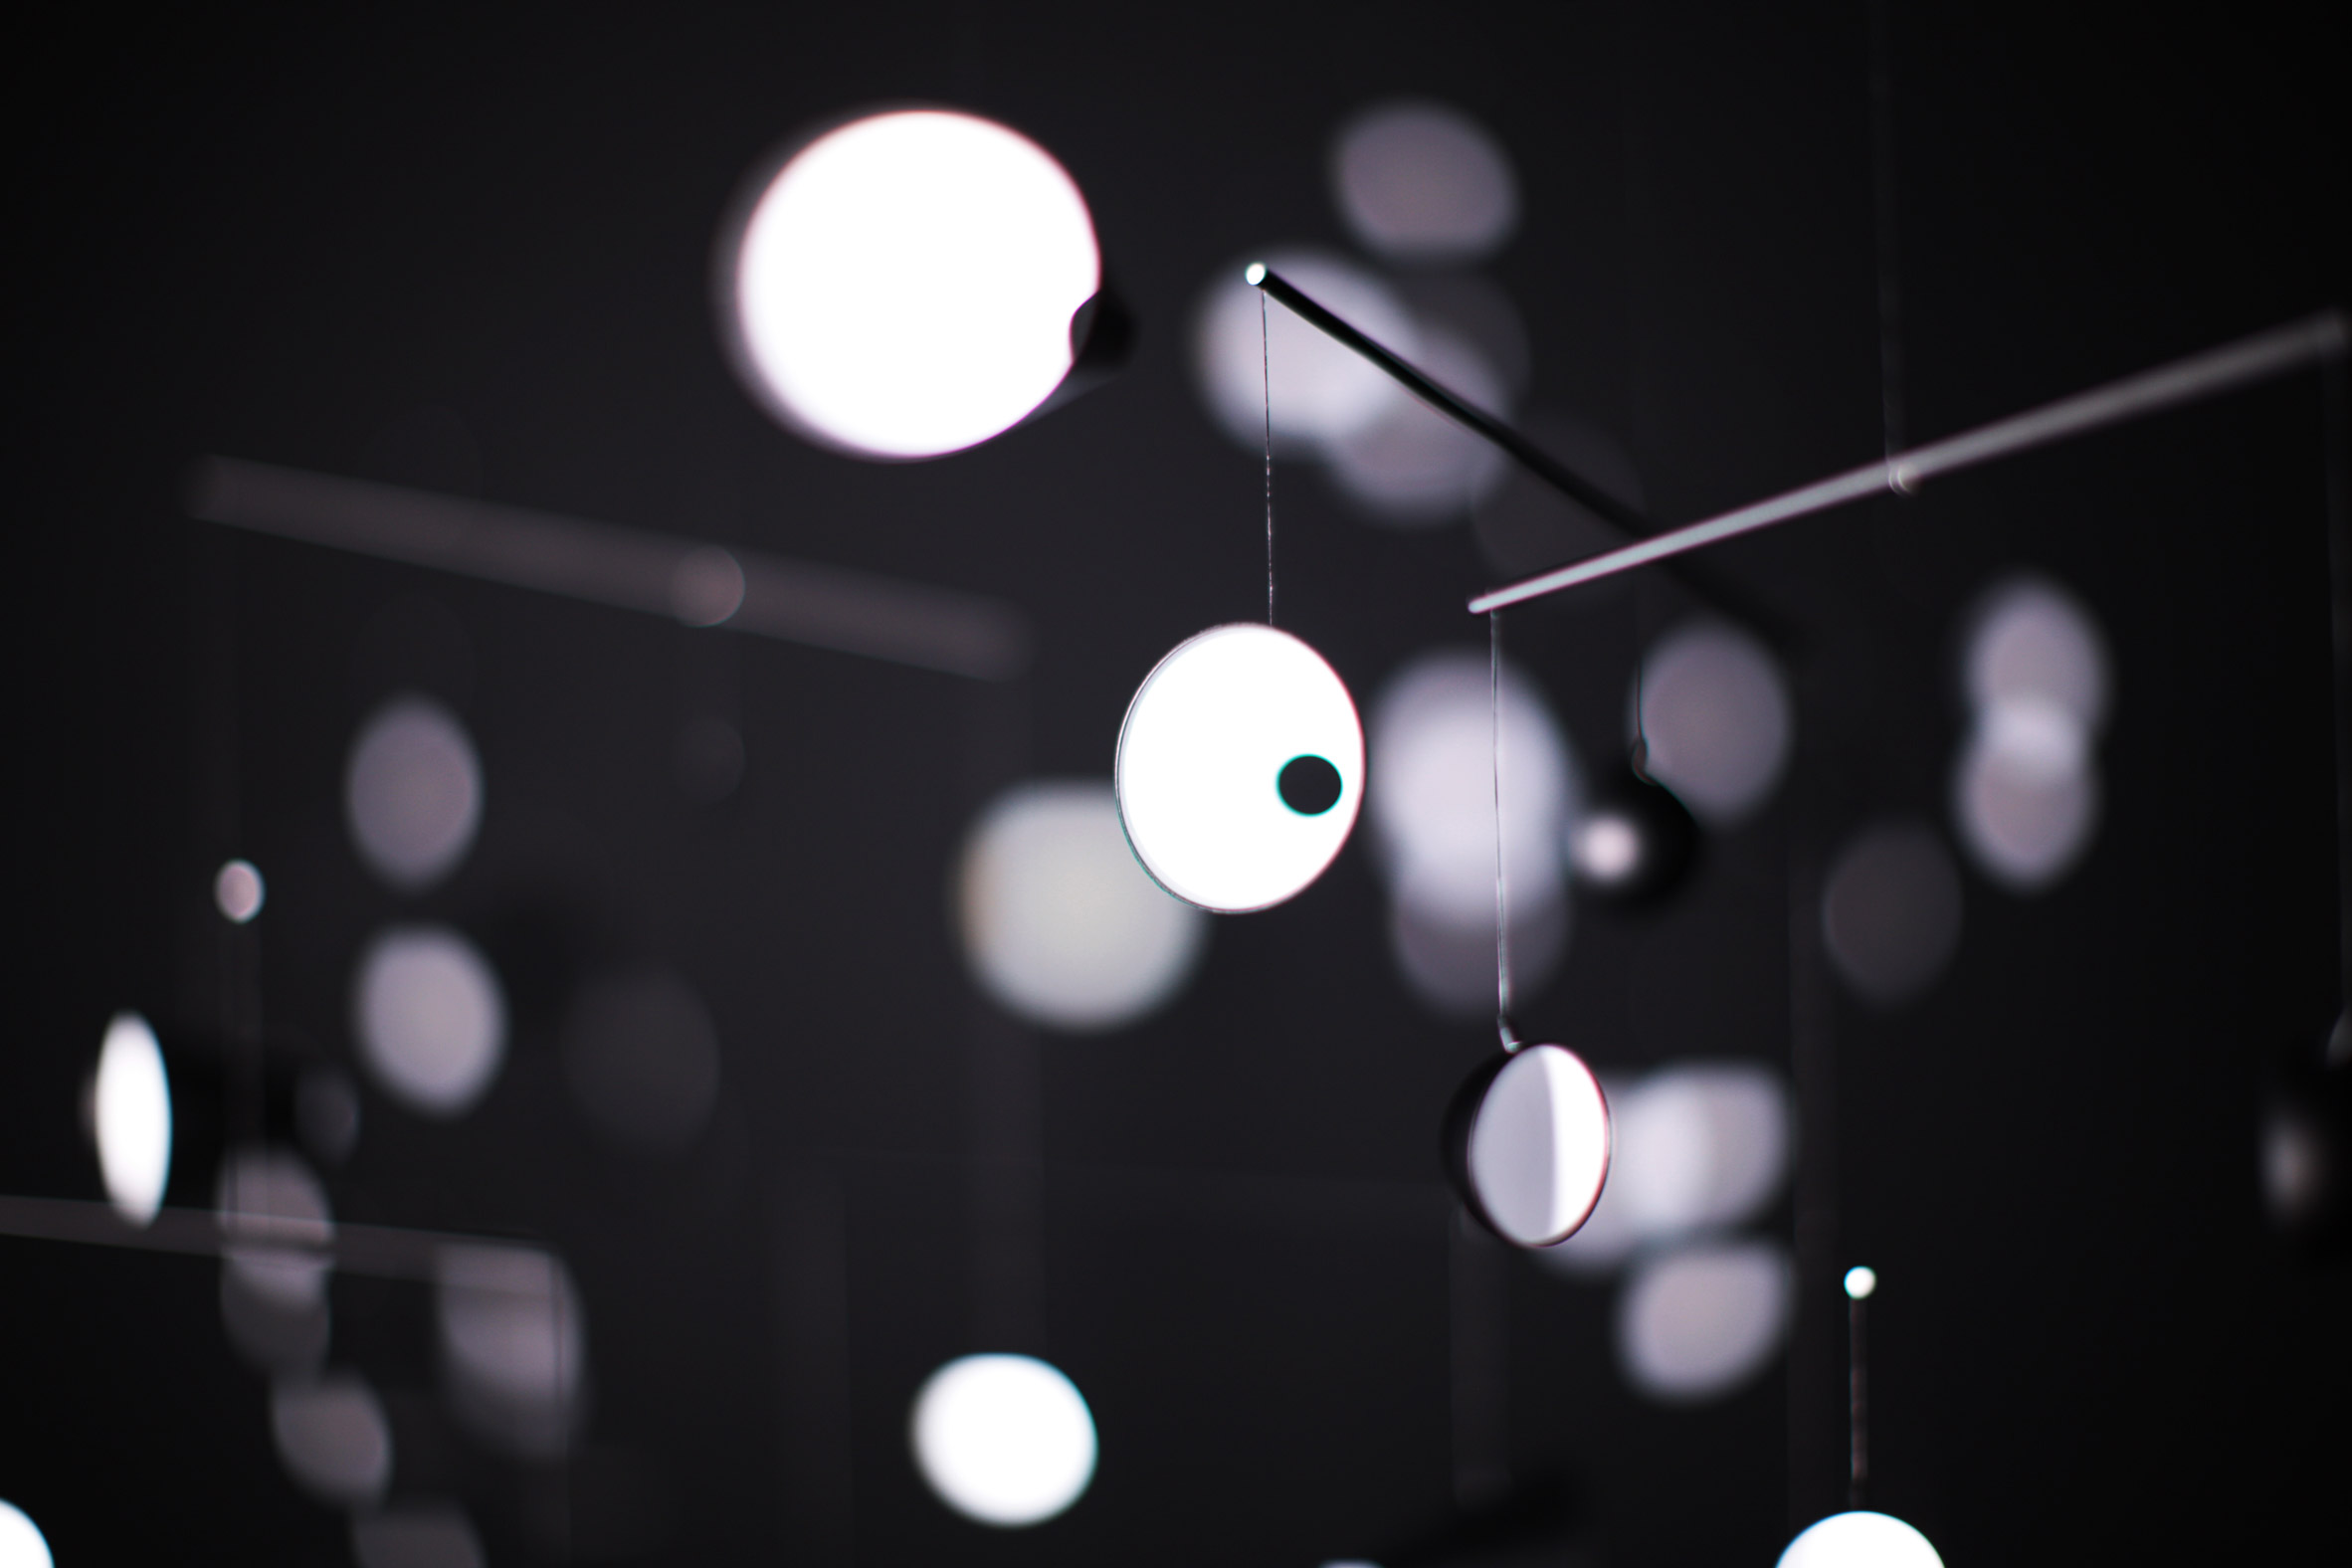 Hiroto Yoshizoe's mirrored mobile reflects light from a single bulb